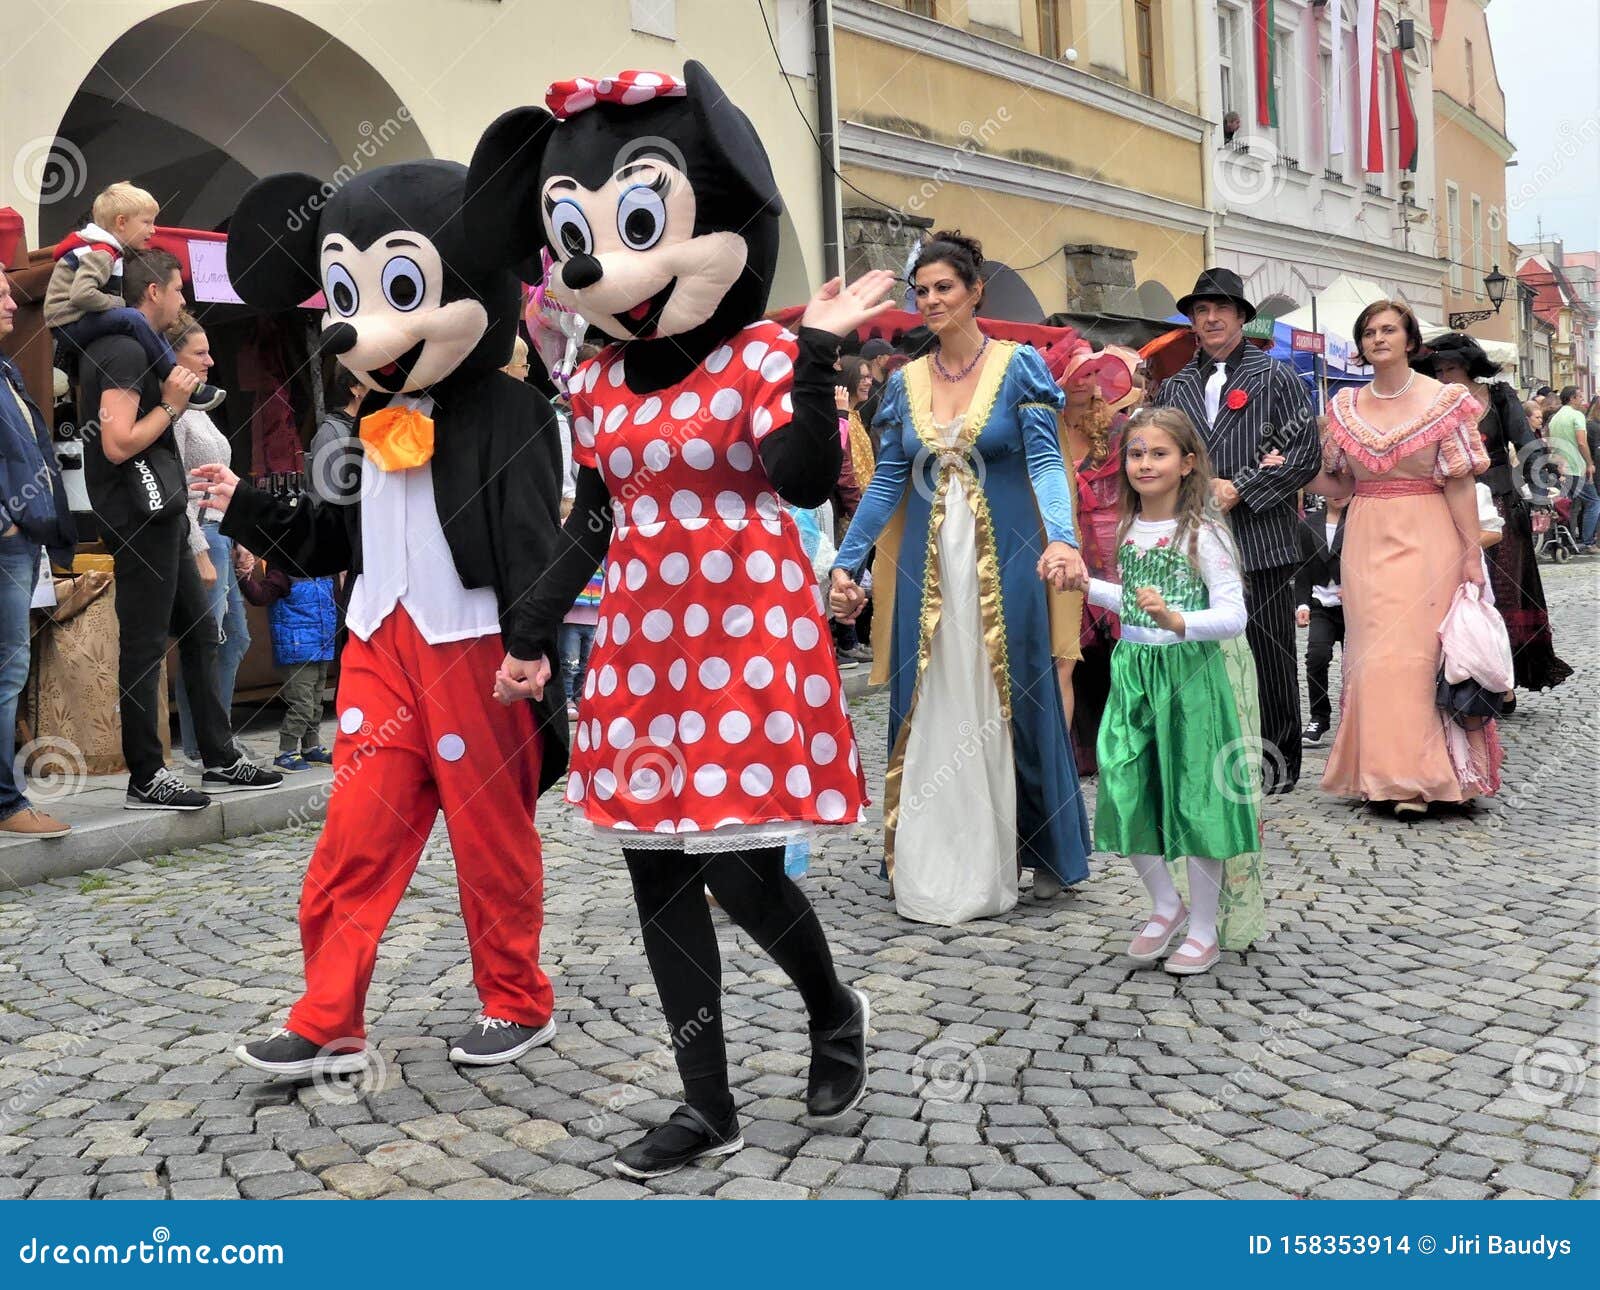 Ropa De Mickey Mouse En Desfile De Carnaval Imagen de archivo editorial - Imagen de desfile, norte: 158353914